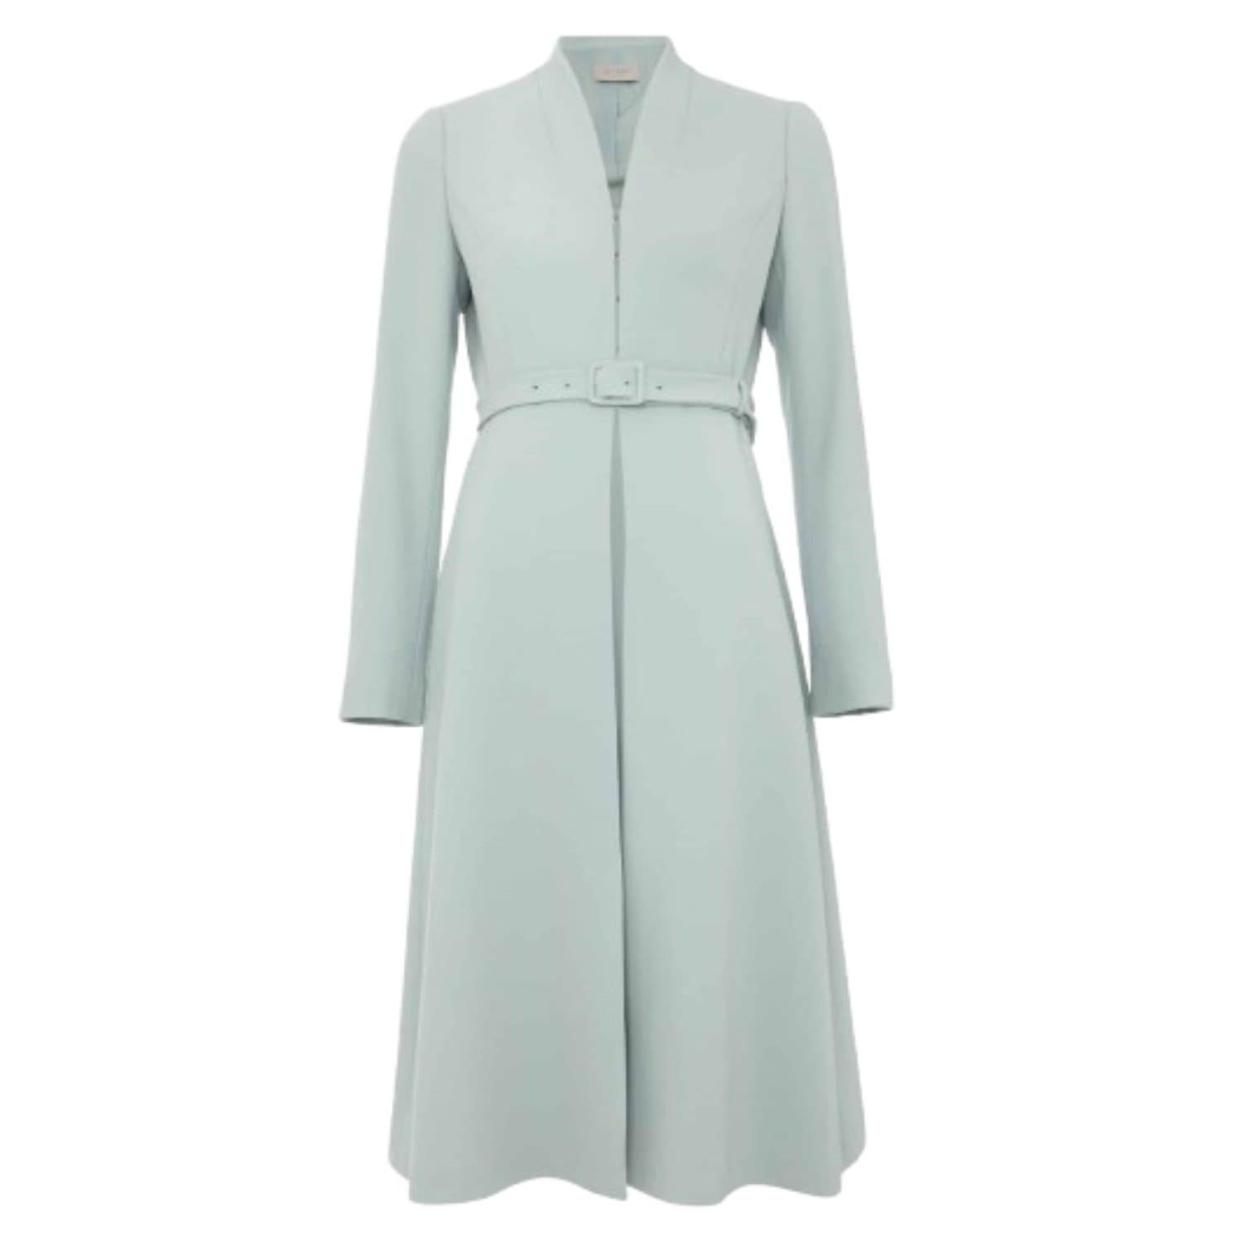 Olivia coat, £249, Hobbs